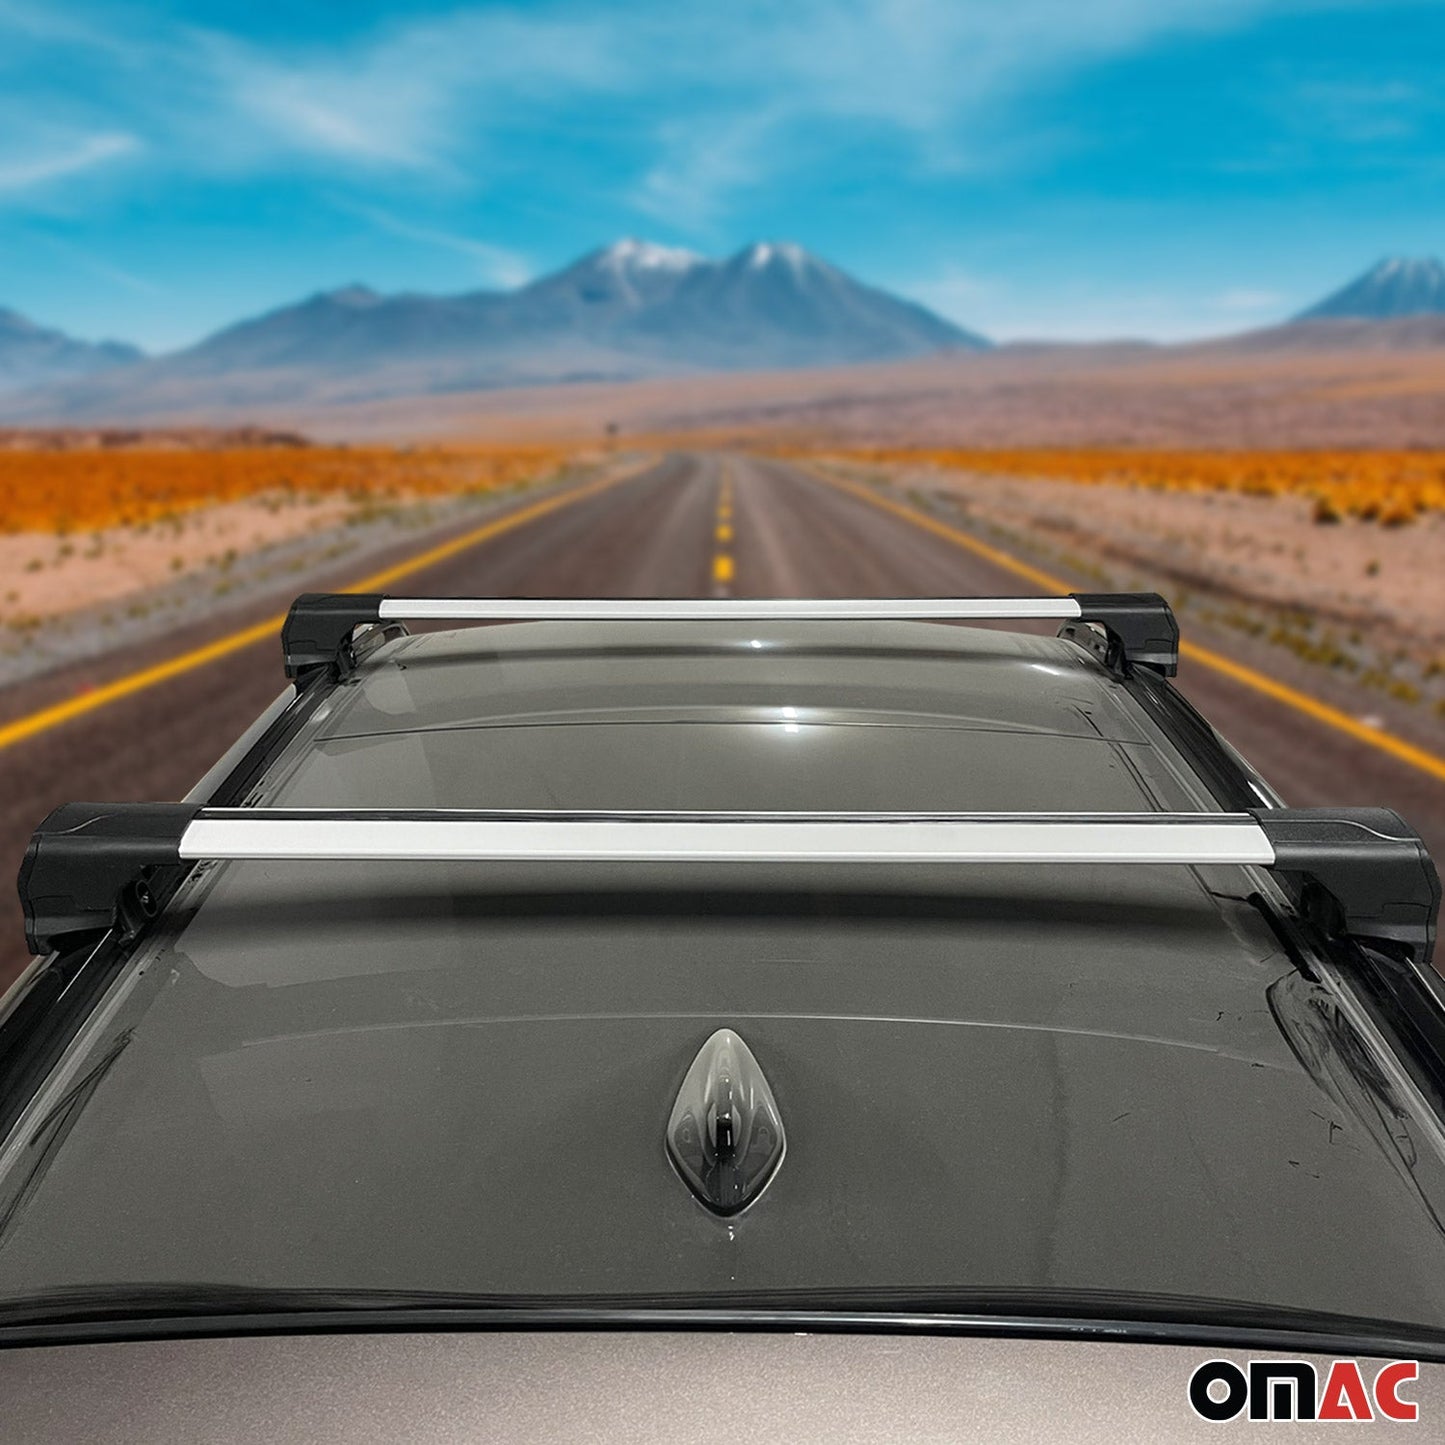 OMAC Alu Roof Racks Cross Bars Luggage Carrier for Lexus NX 200 2015-2021 Gray 2Pcs '5228916